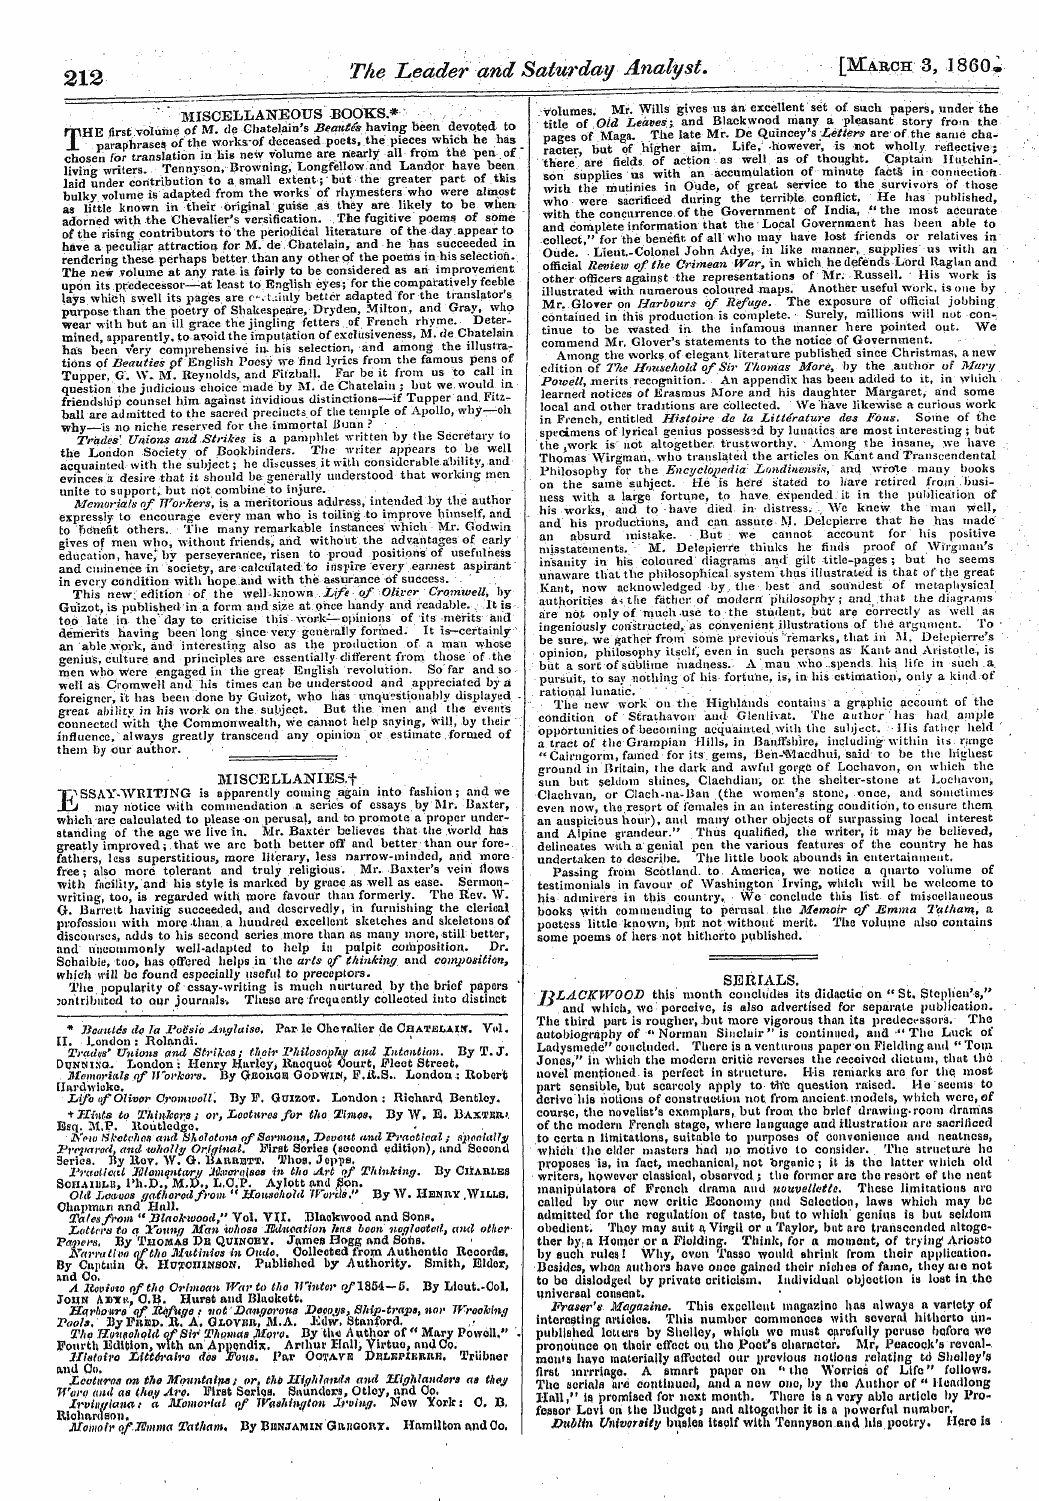 Leader (1850-1860): jS F Y, 2nd edition - 212 Theleddw-Awls<^Day-A^